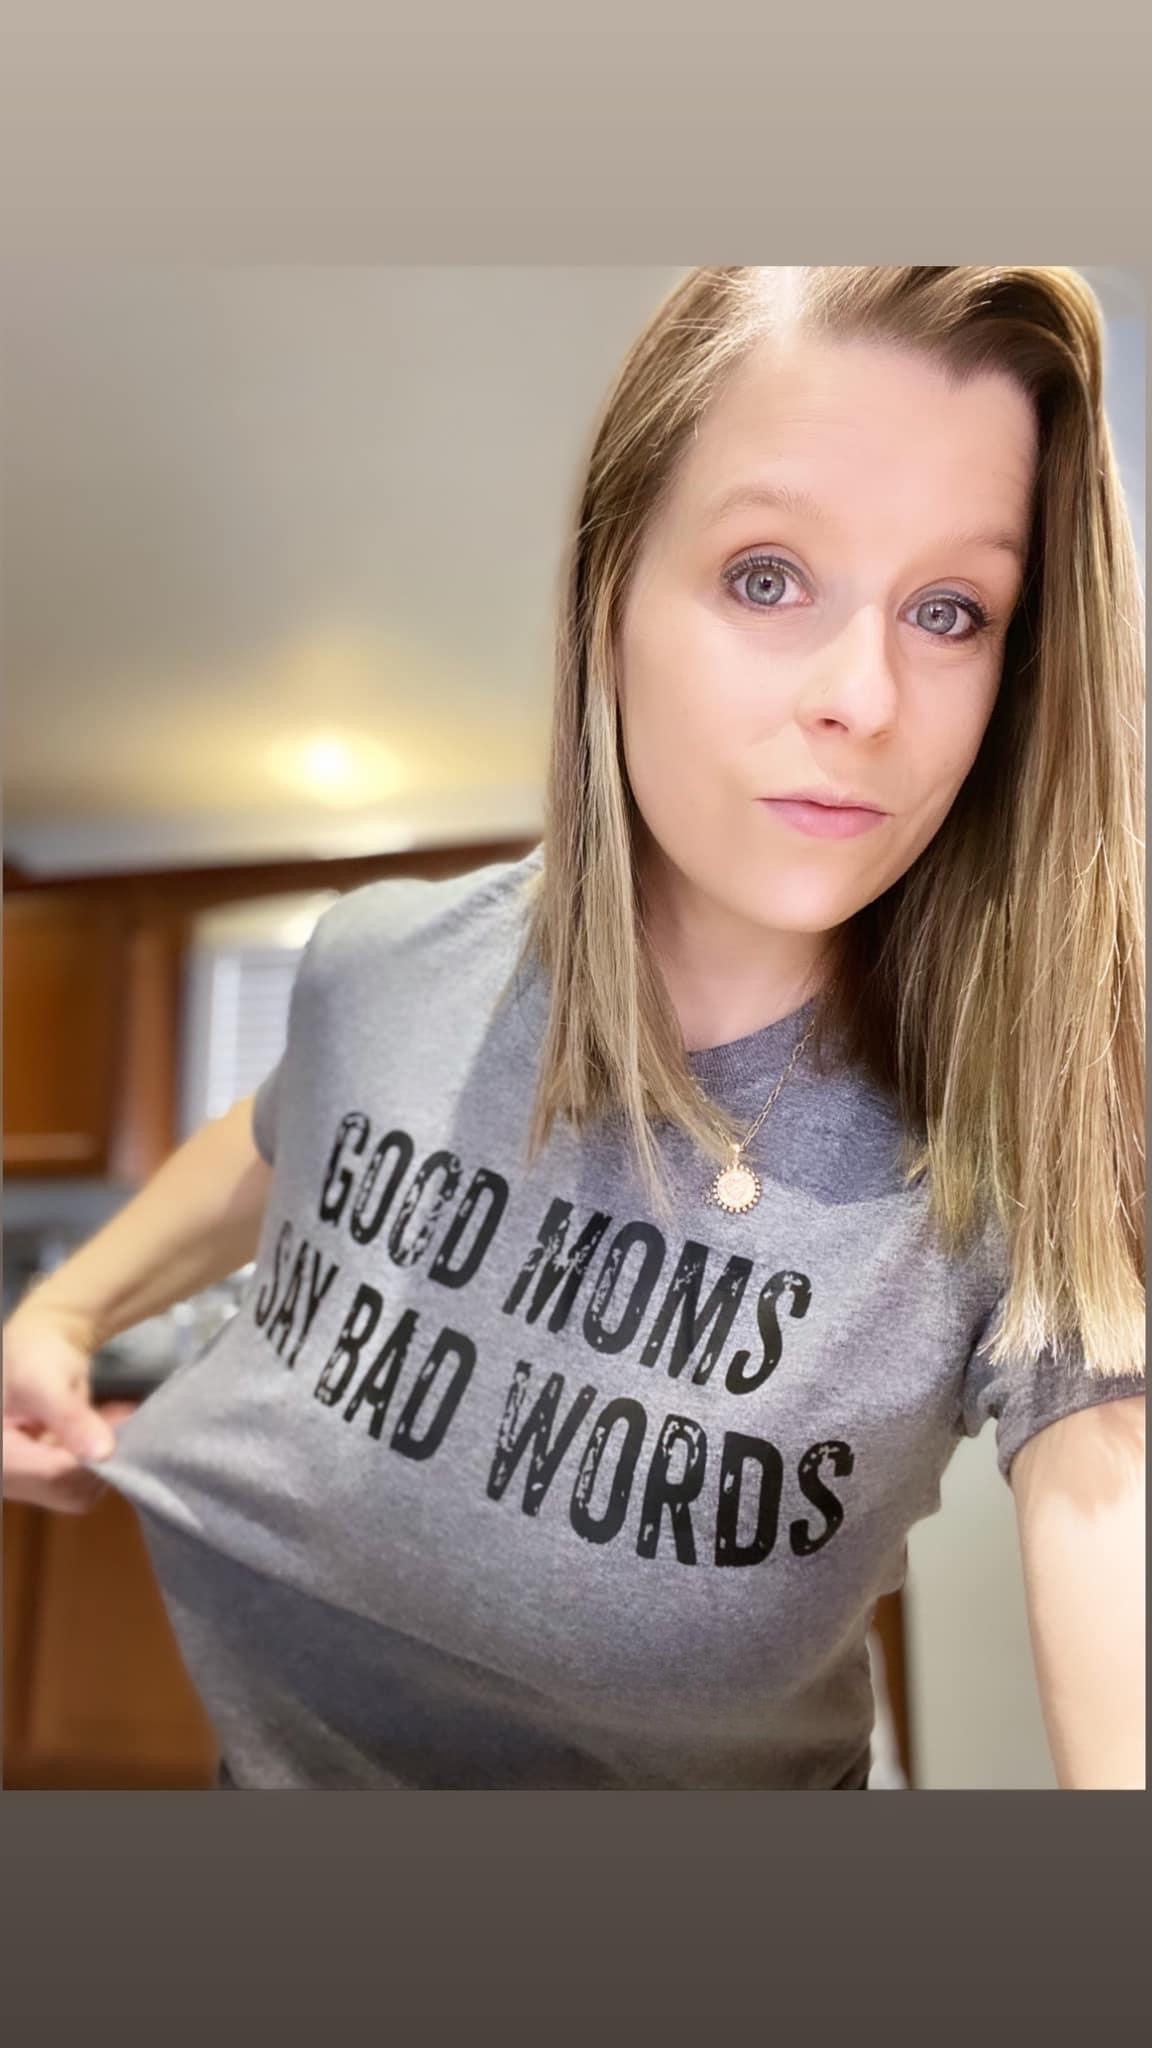 Bad Words T-shirt